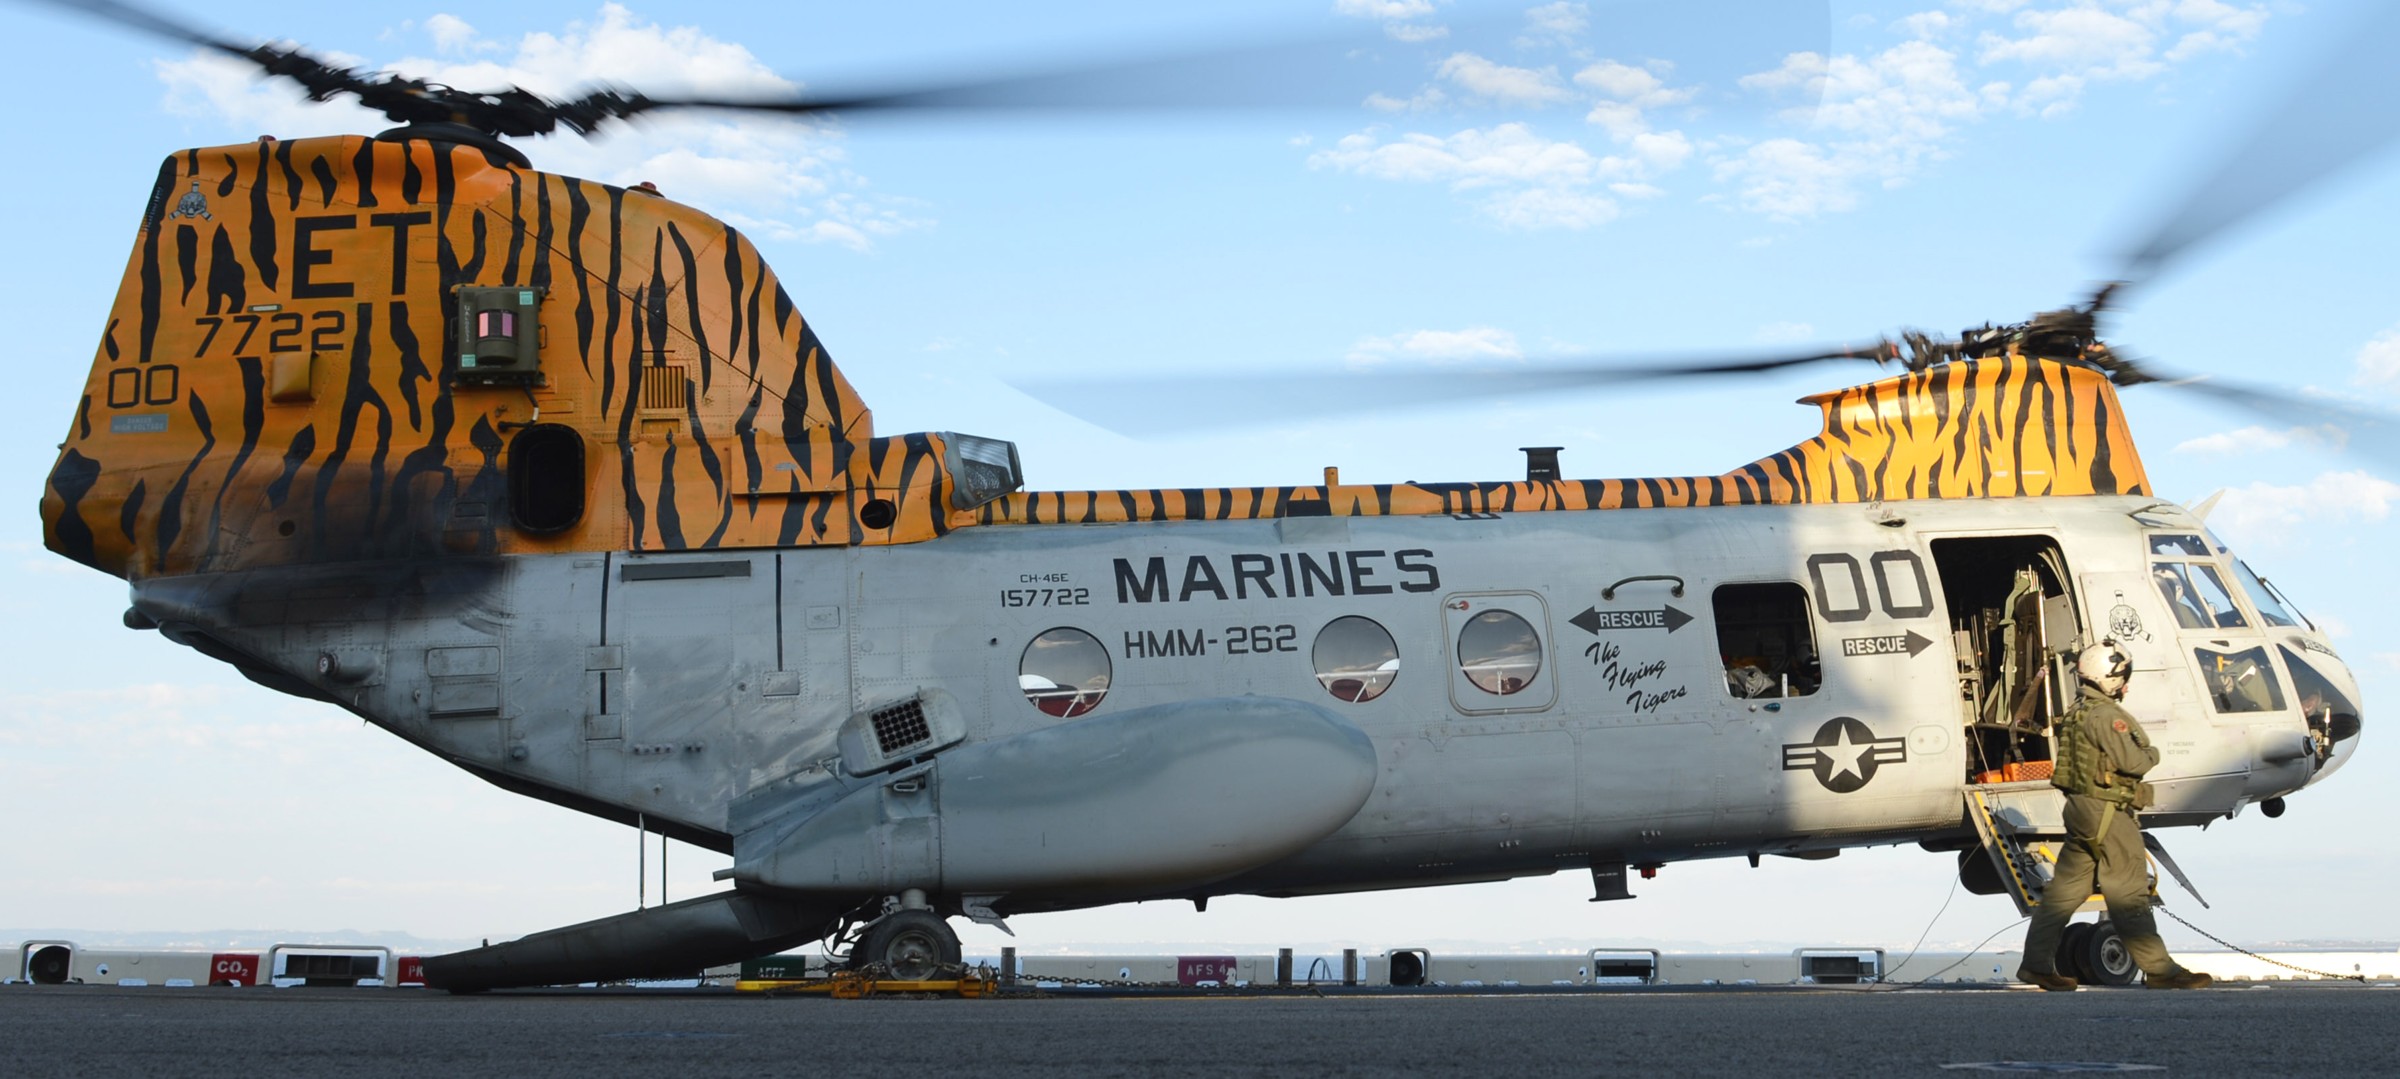 hmm-262 flying tigers marine medium helicopter squadron usmc ch-46e sea knight 06 uss bonhomme richard lhd-6